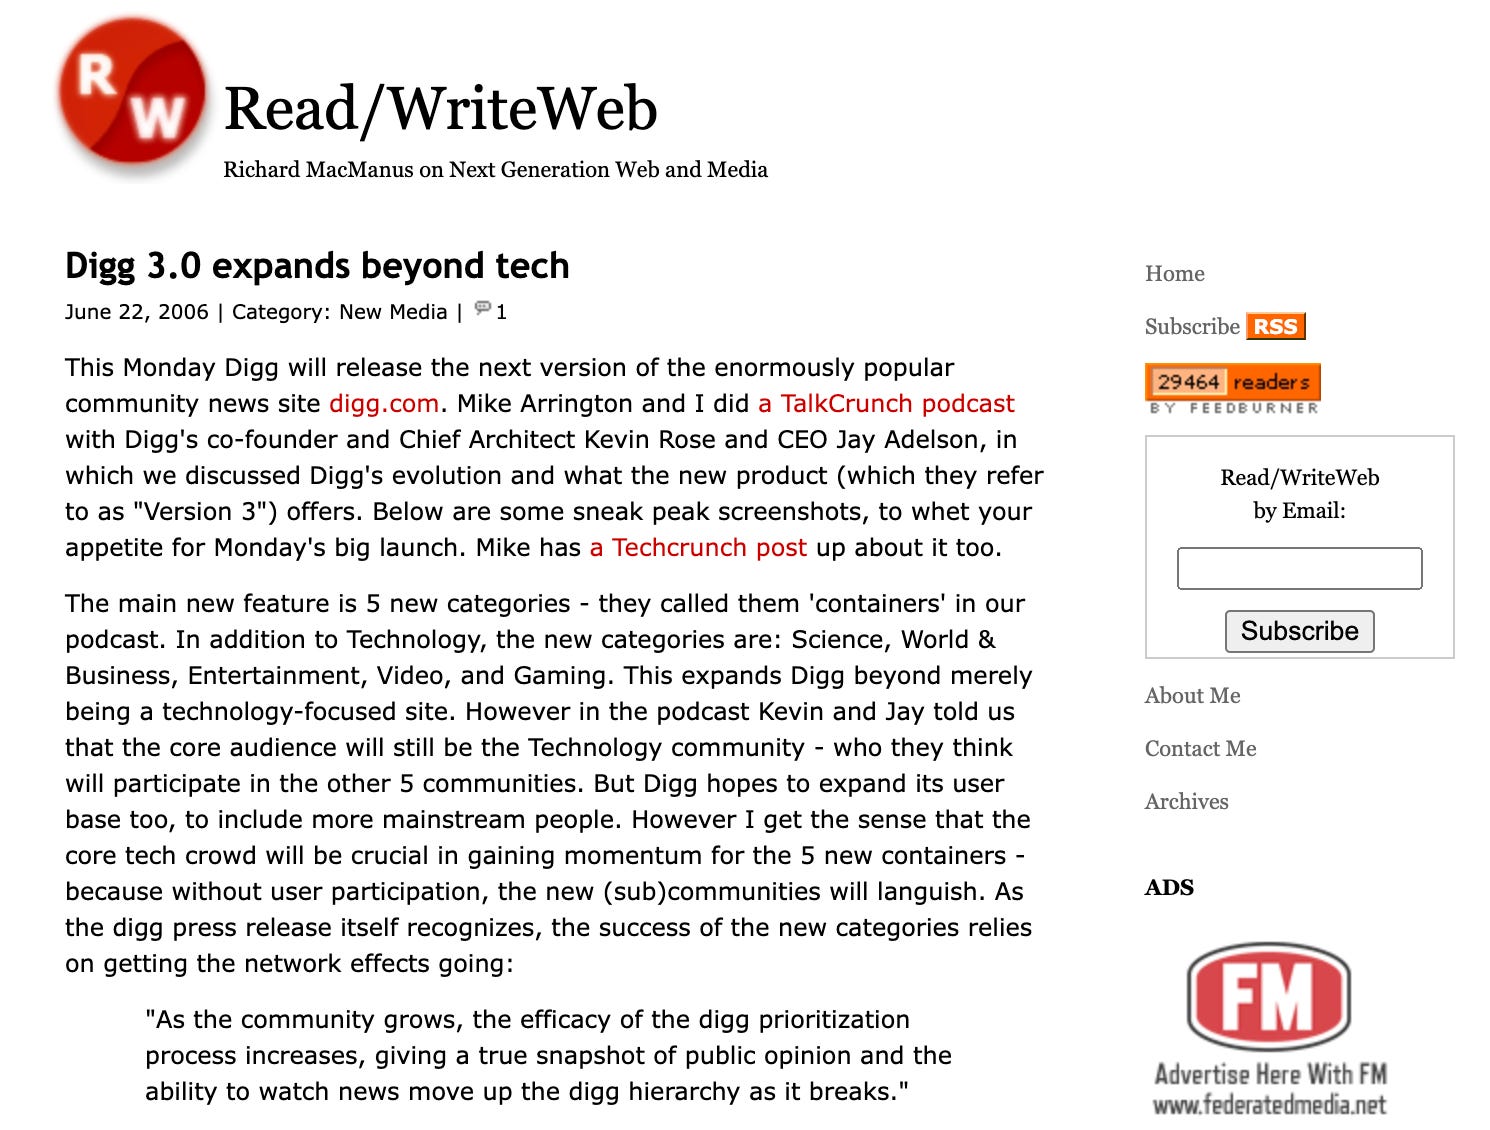 My writeup of “Digg 3.0”, June 2006